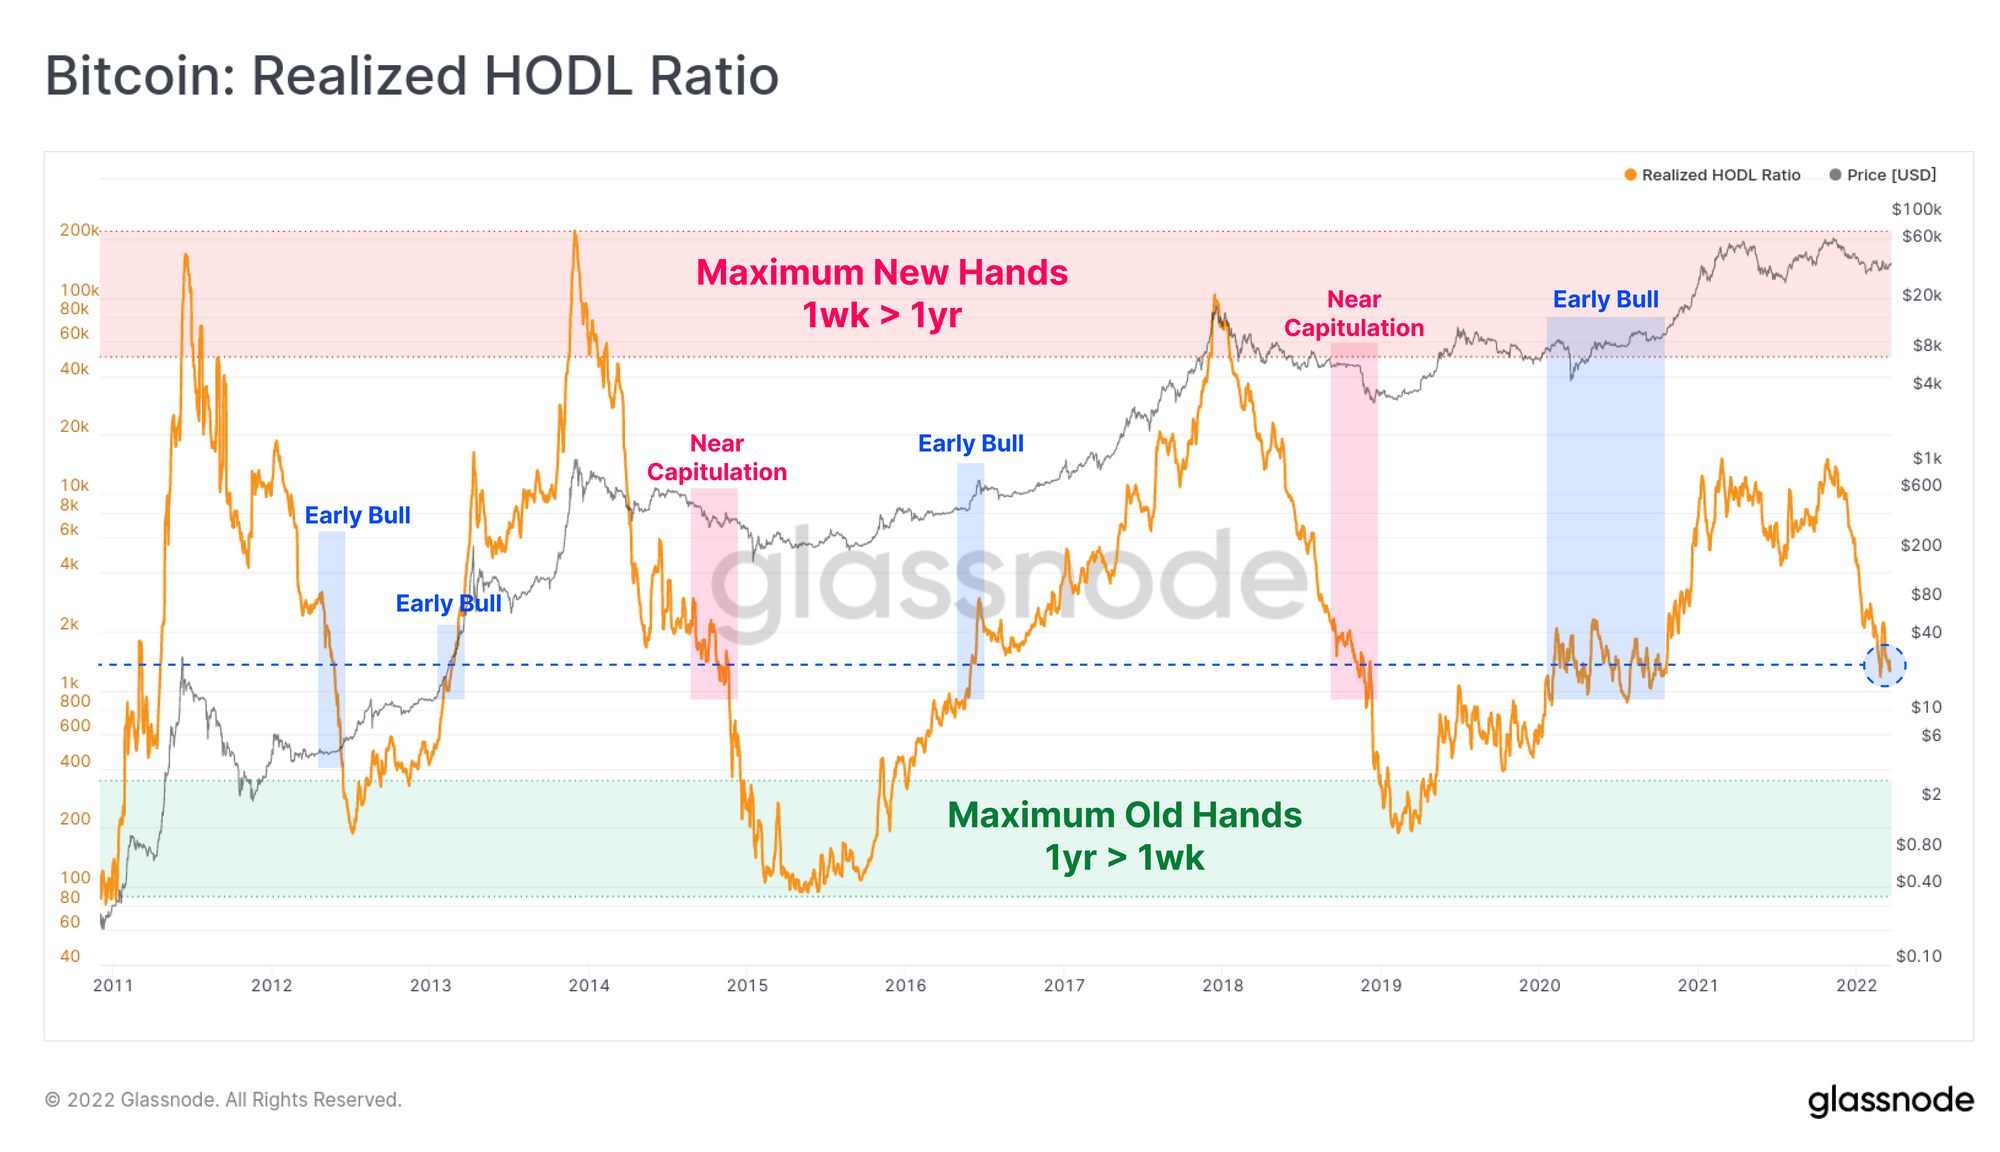 Bitcoin Realized HODL Ratio